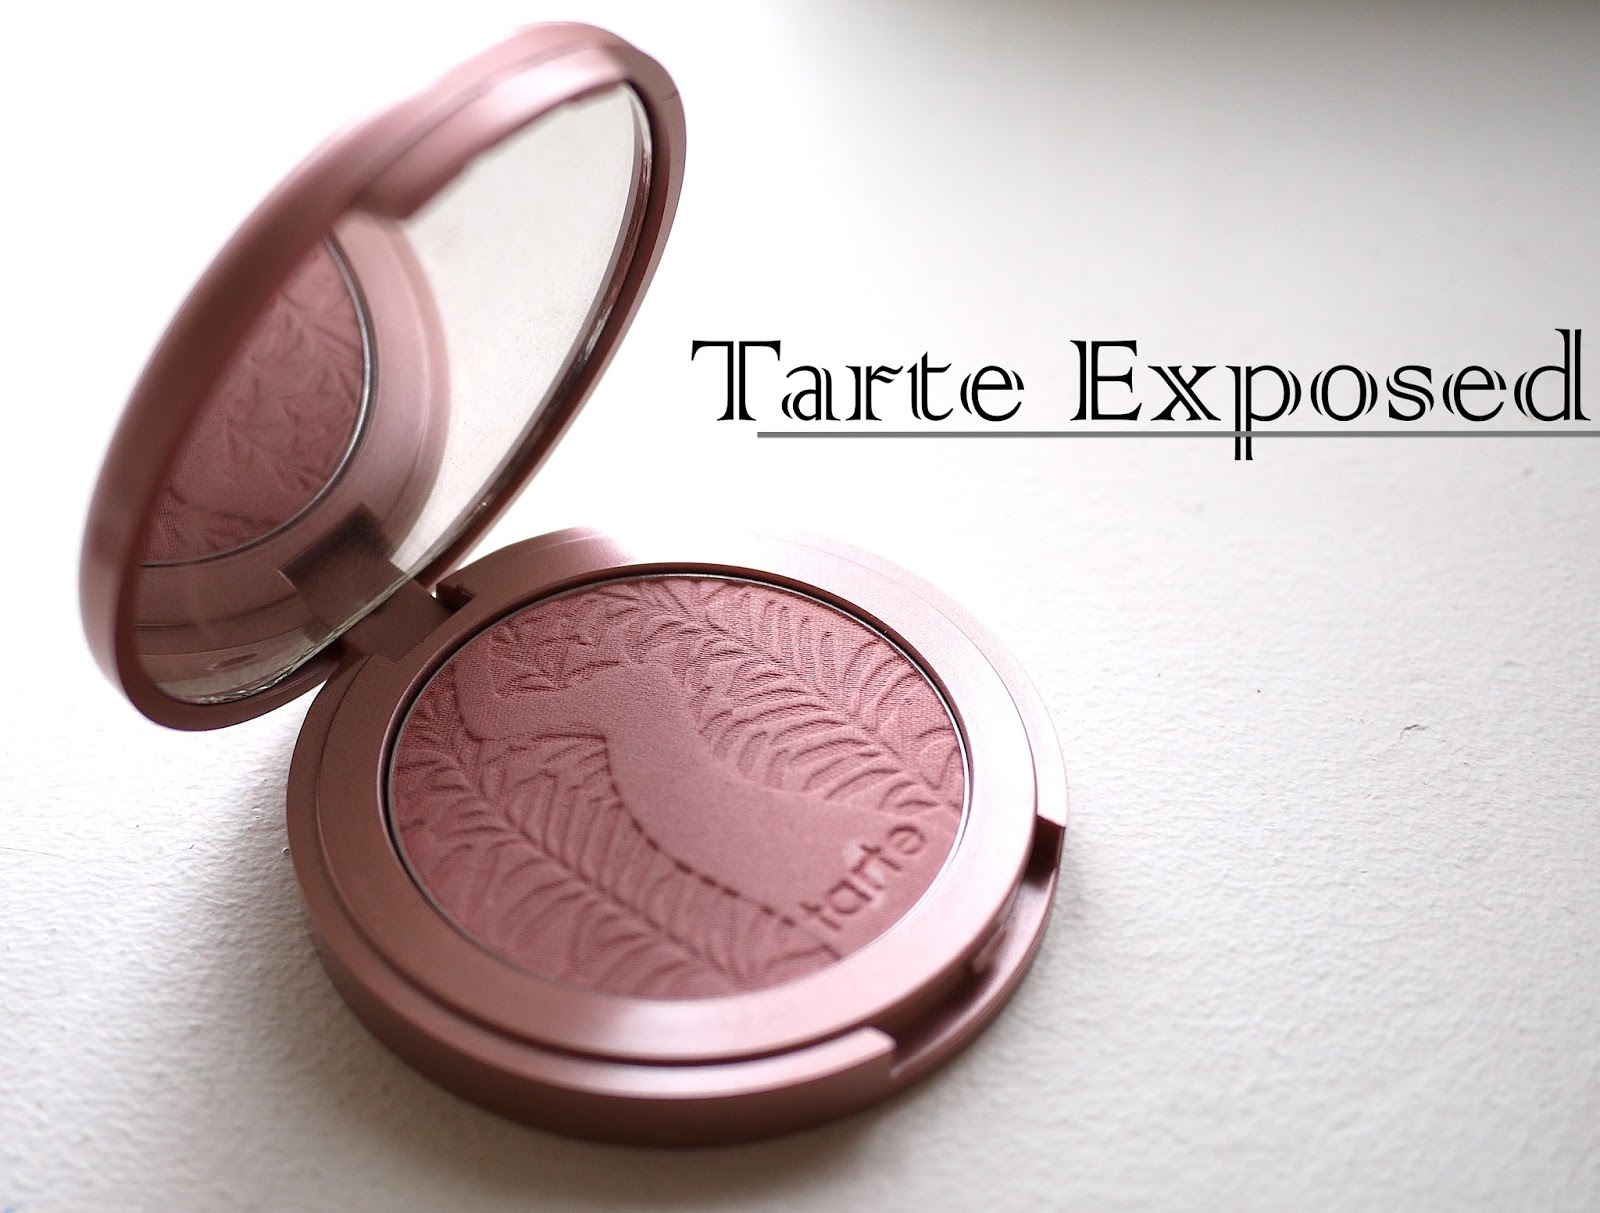 Tarte Exposed  blush review